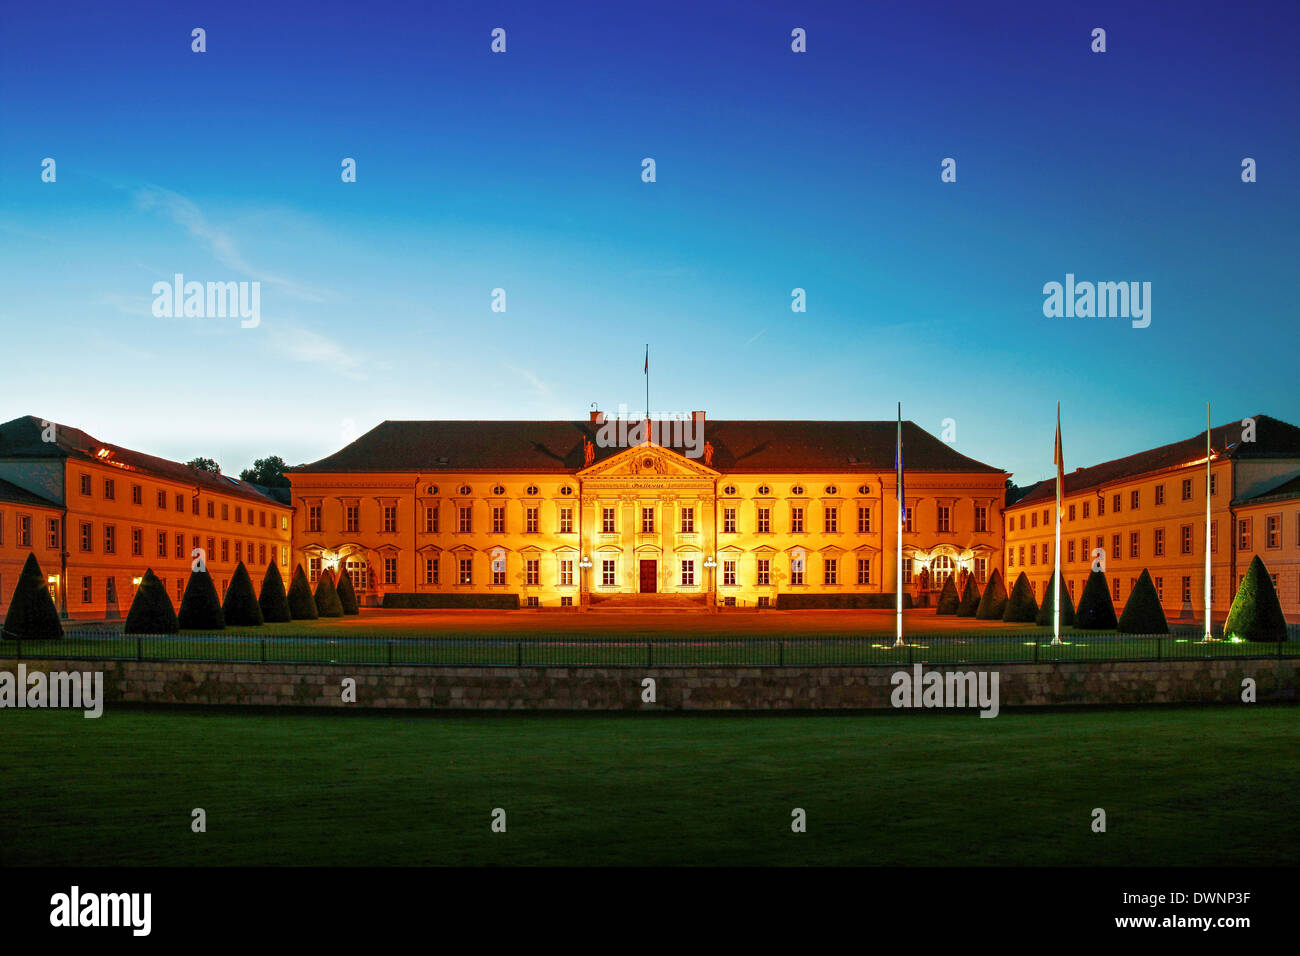 Schloss Bellevue Palace, official residence of the German Federal President, Tiergarten, Berlin, Germany Stock Photo